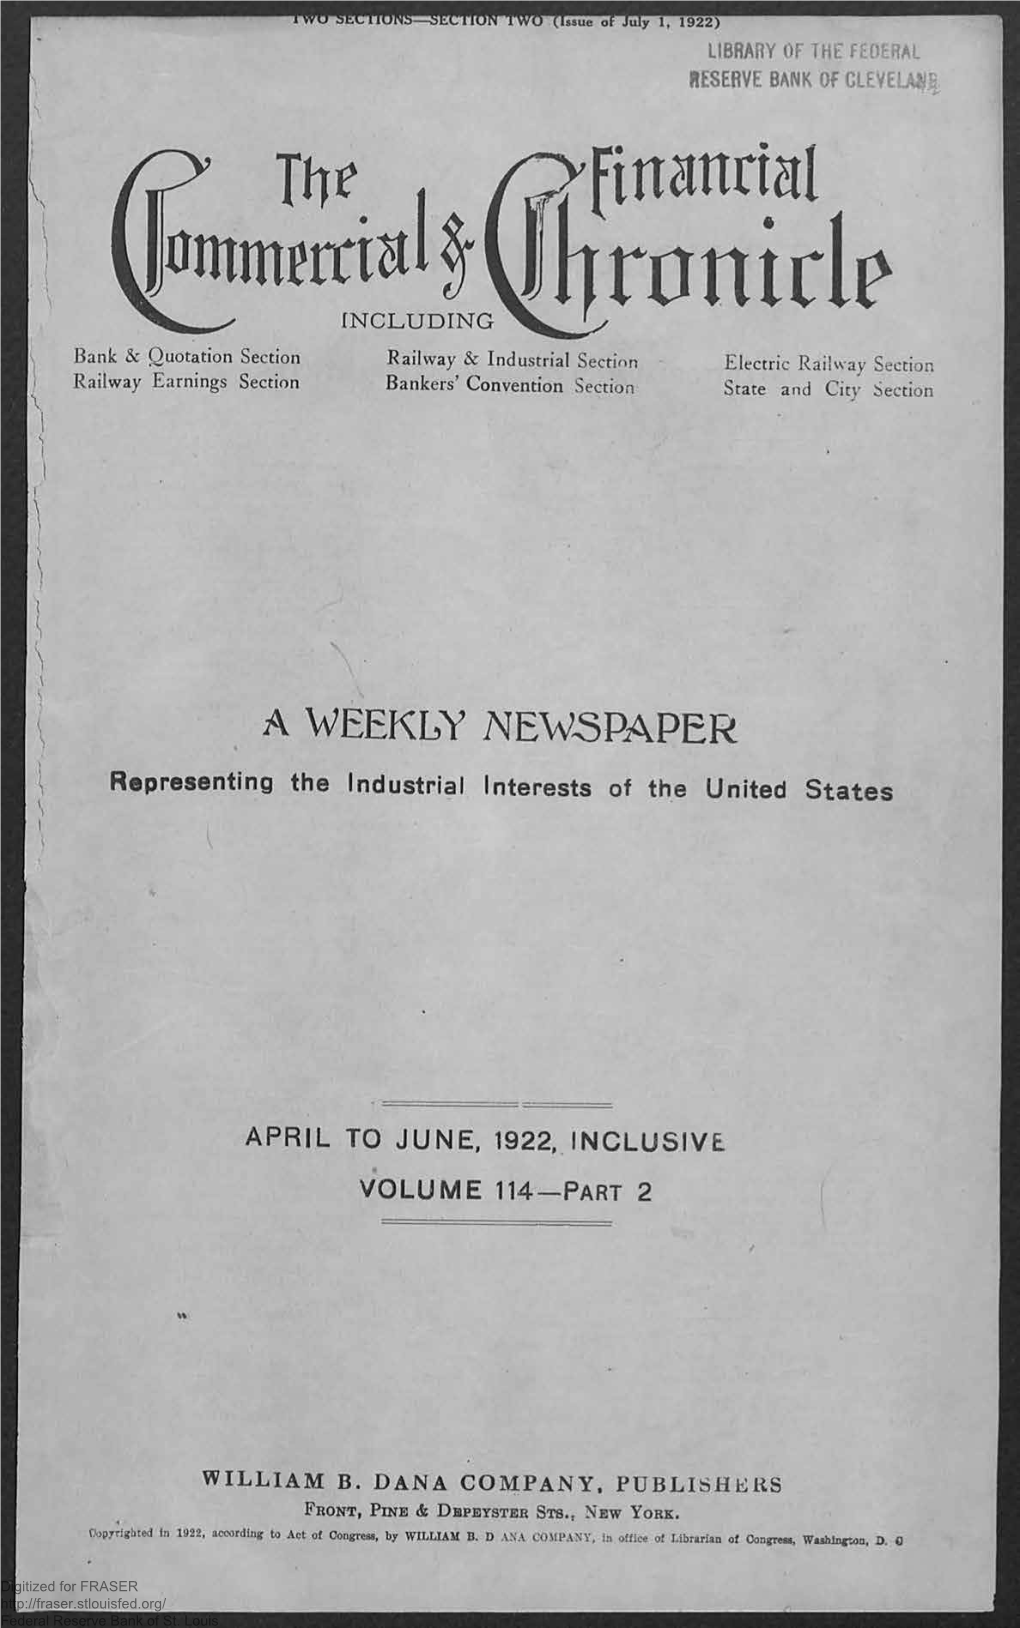 April to June, 1922, Inclusive Volume 114—Part 2